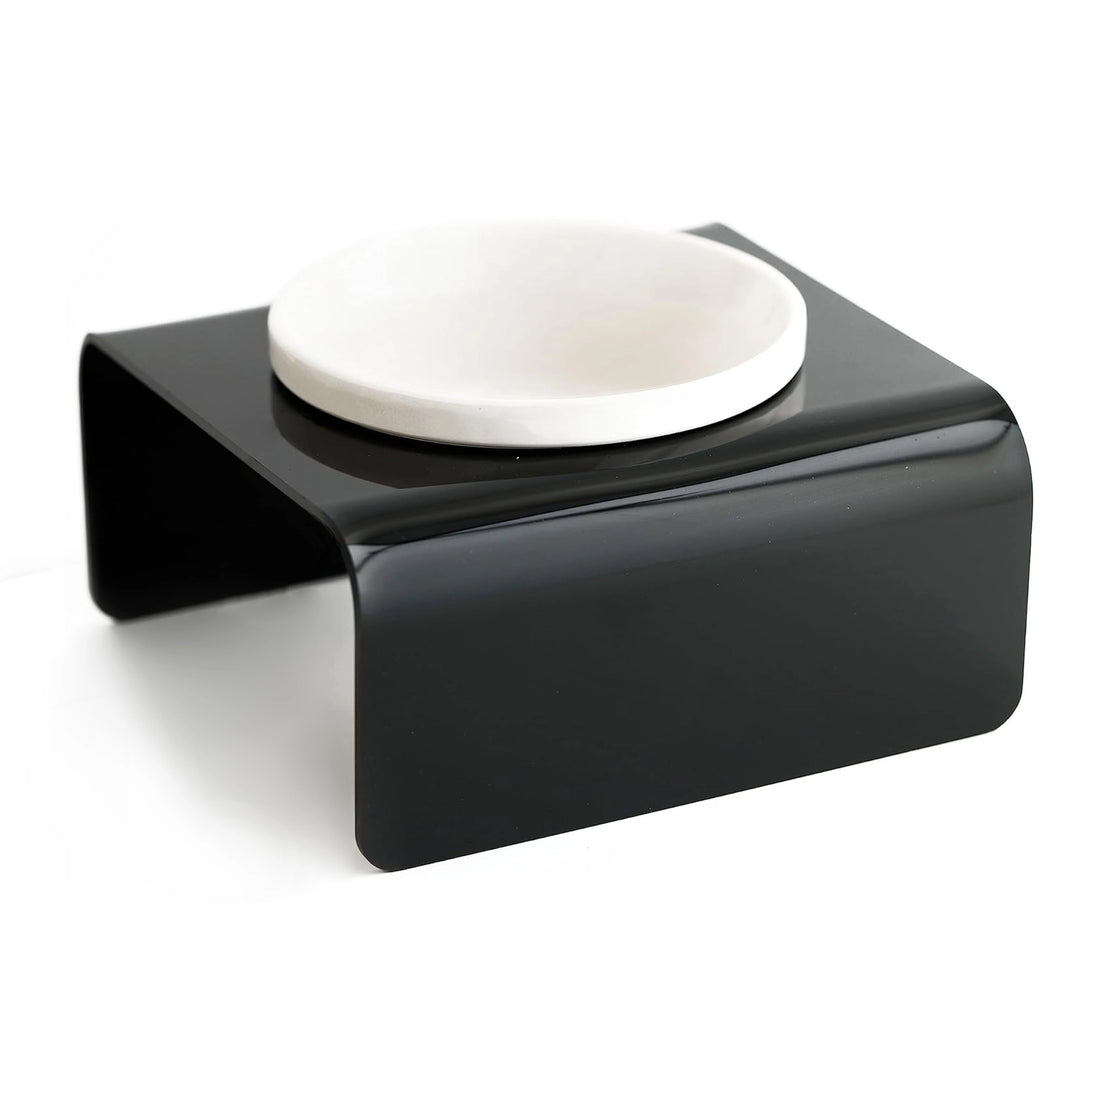 Single Plexiglass Ceramic Feeding Station - Black